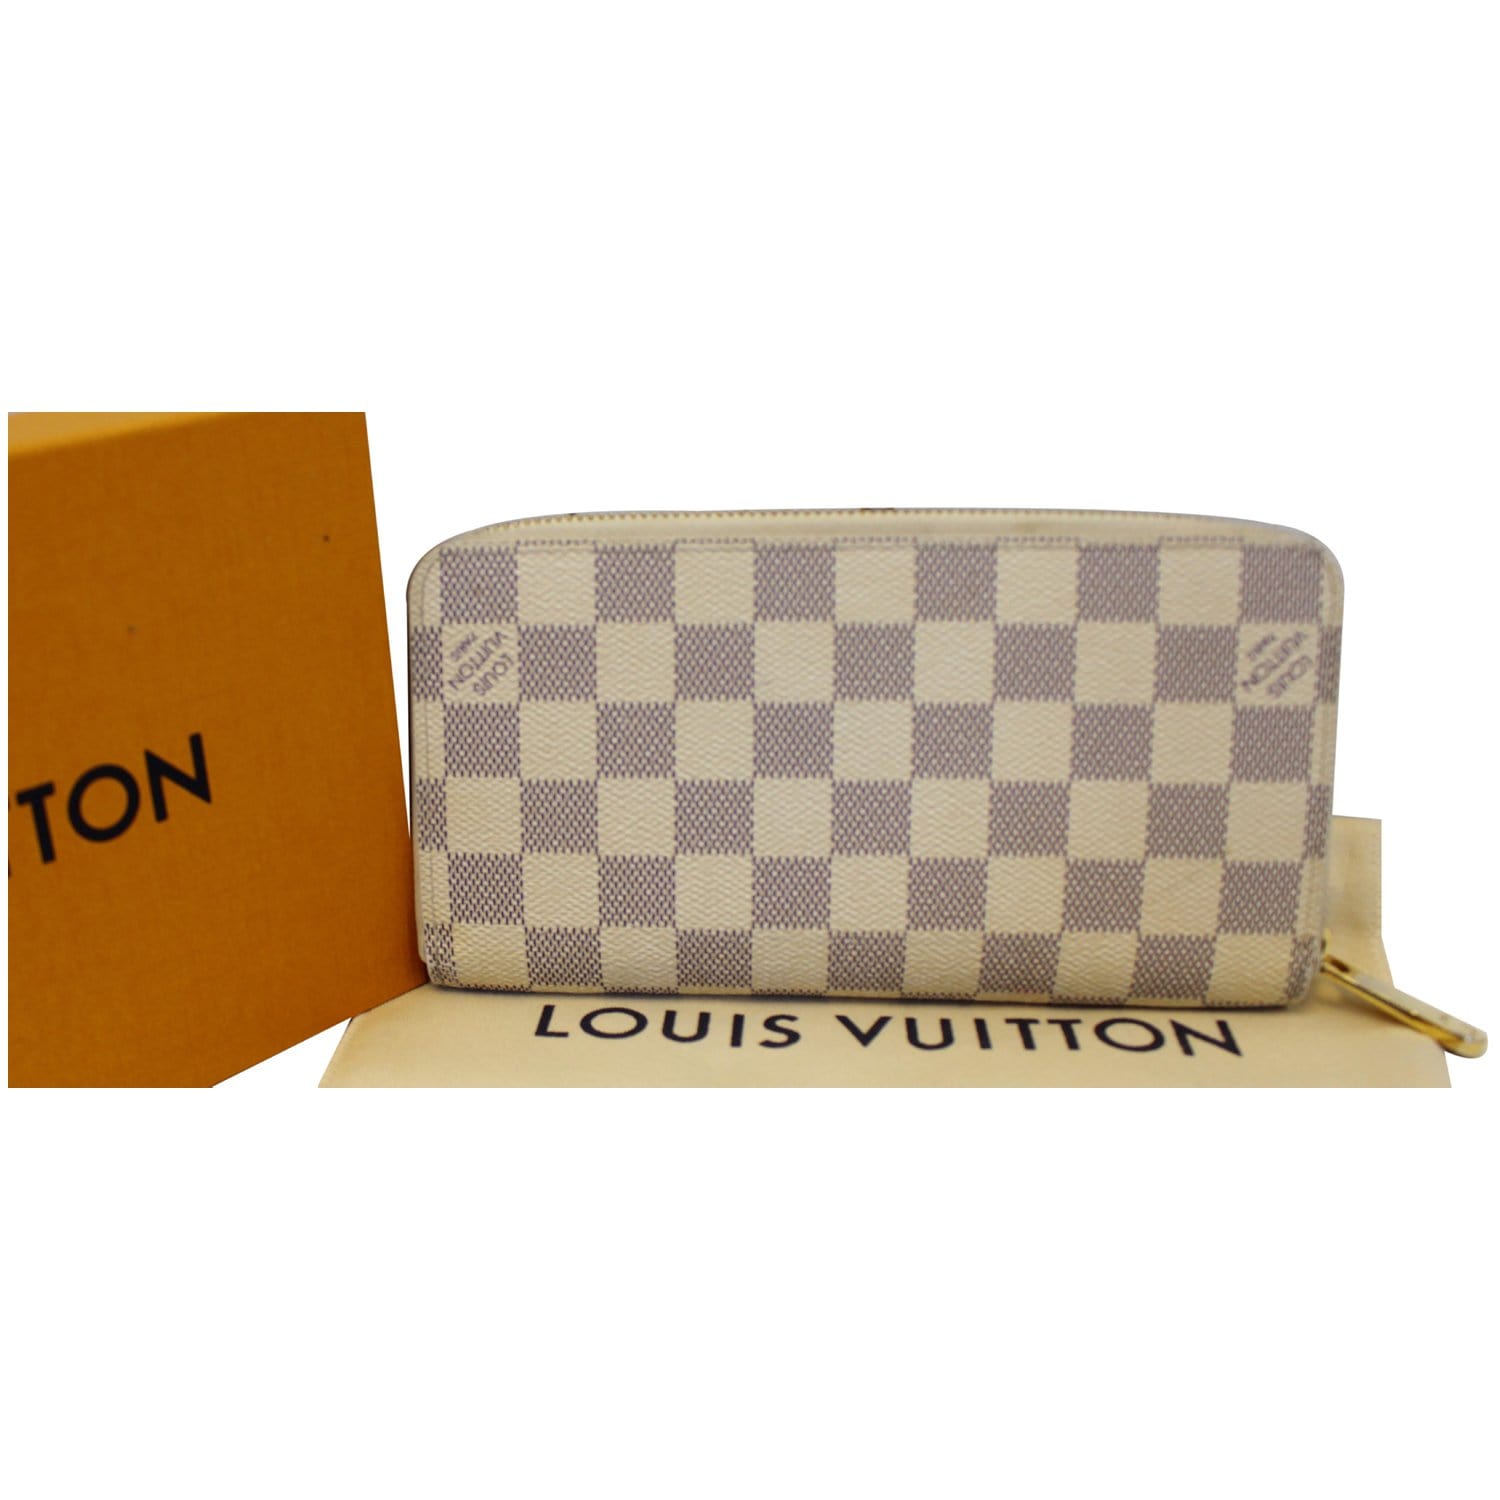 Sale Clearance 👉🏻 Louis Vuitton Double V Compact Wallet, Luxury